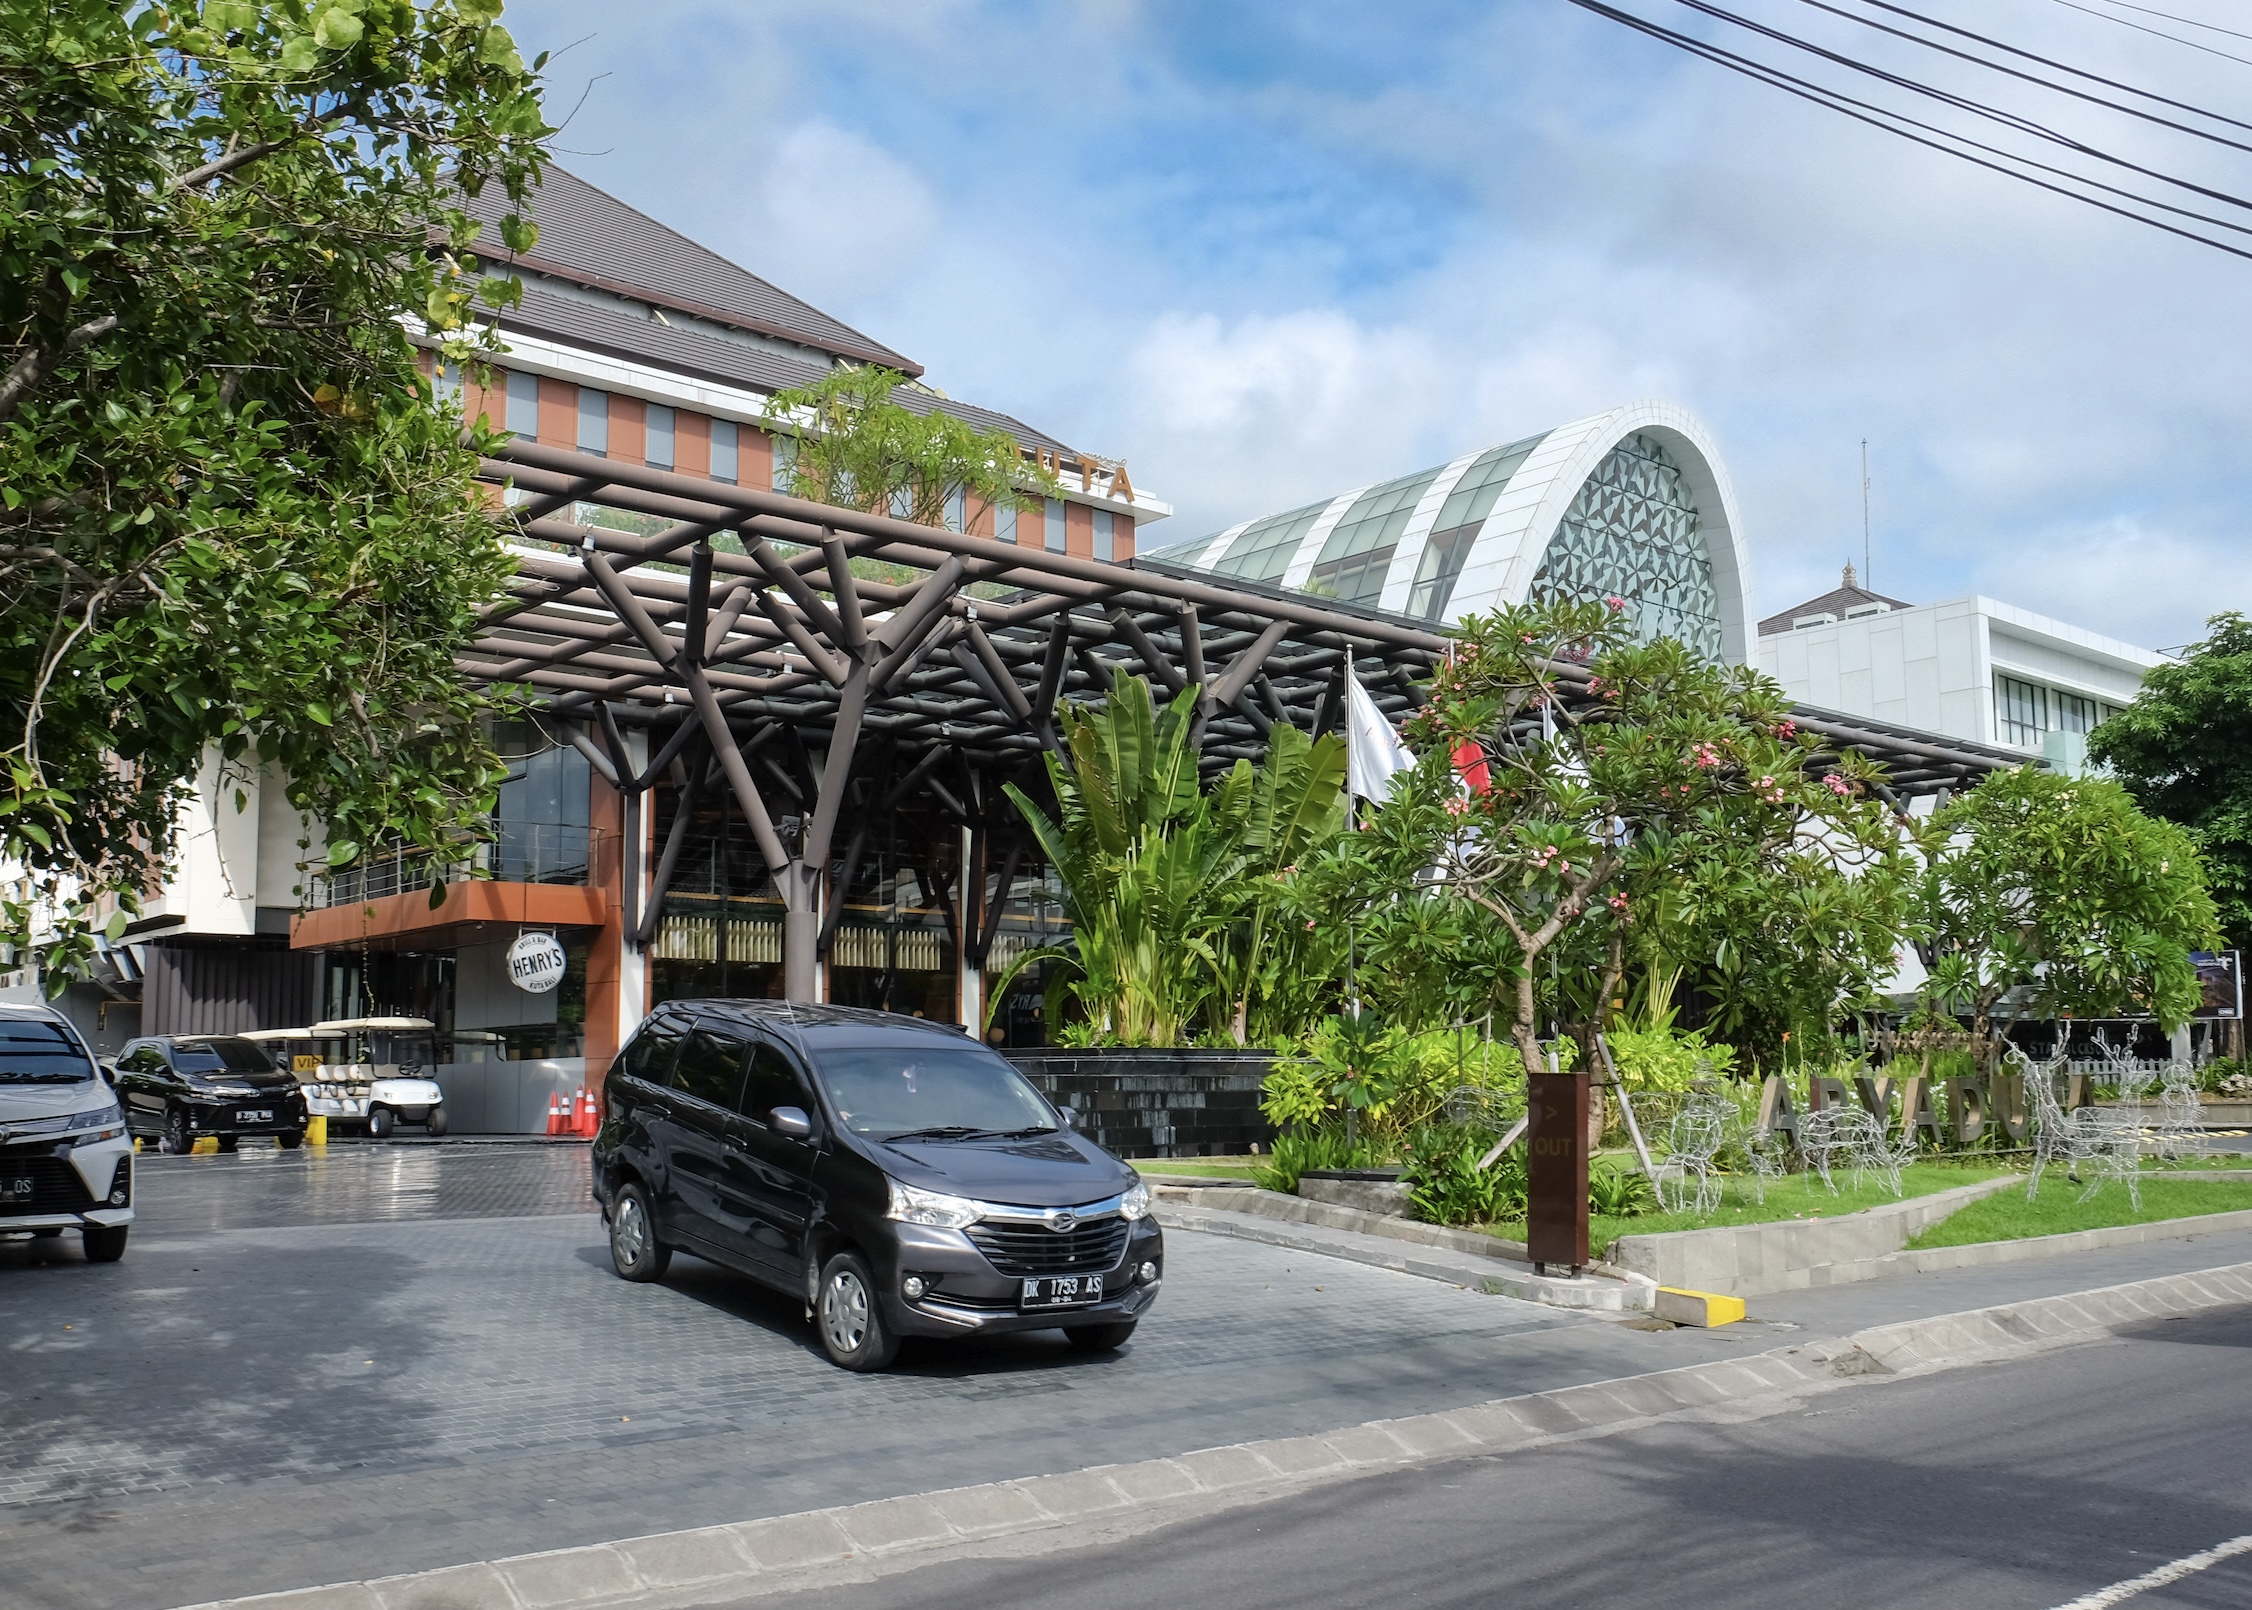 Bali Hotels Bookings In Mass Decline Following Holiday Season